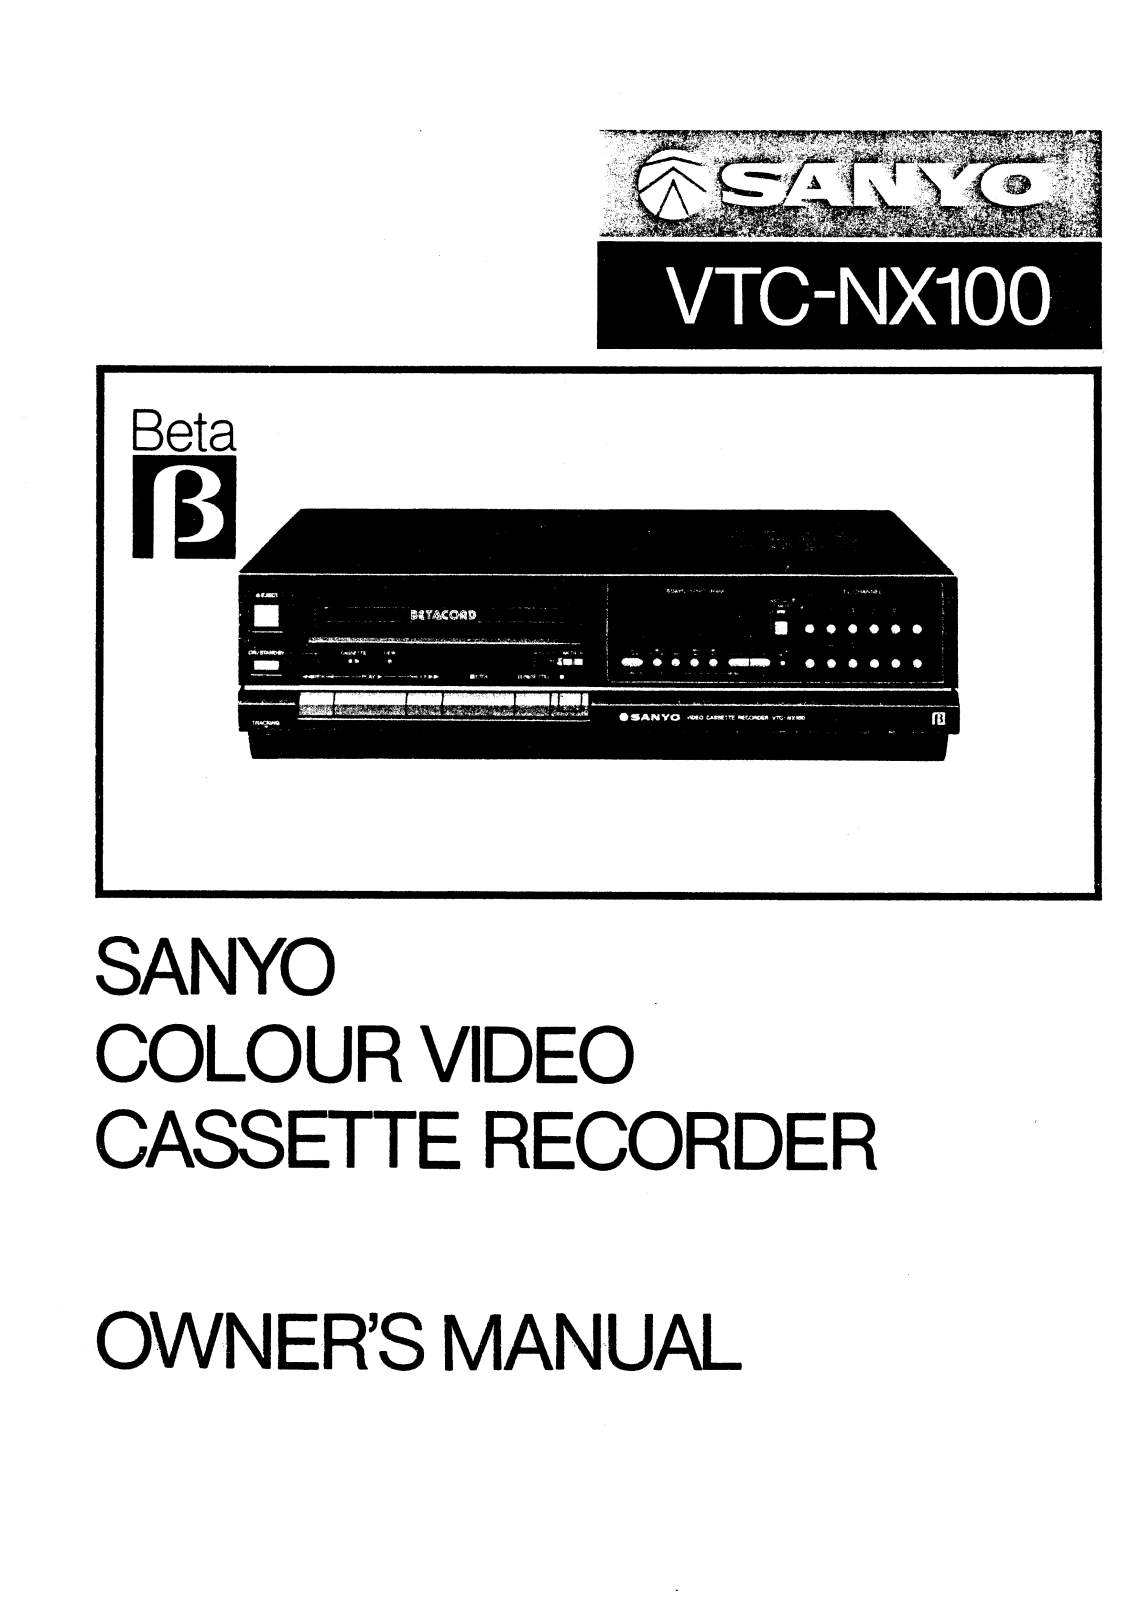 Sanyo VTC-NX100 Instruction Manual